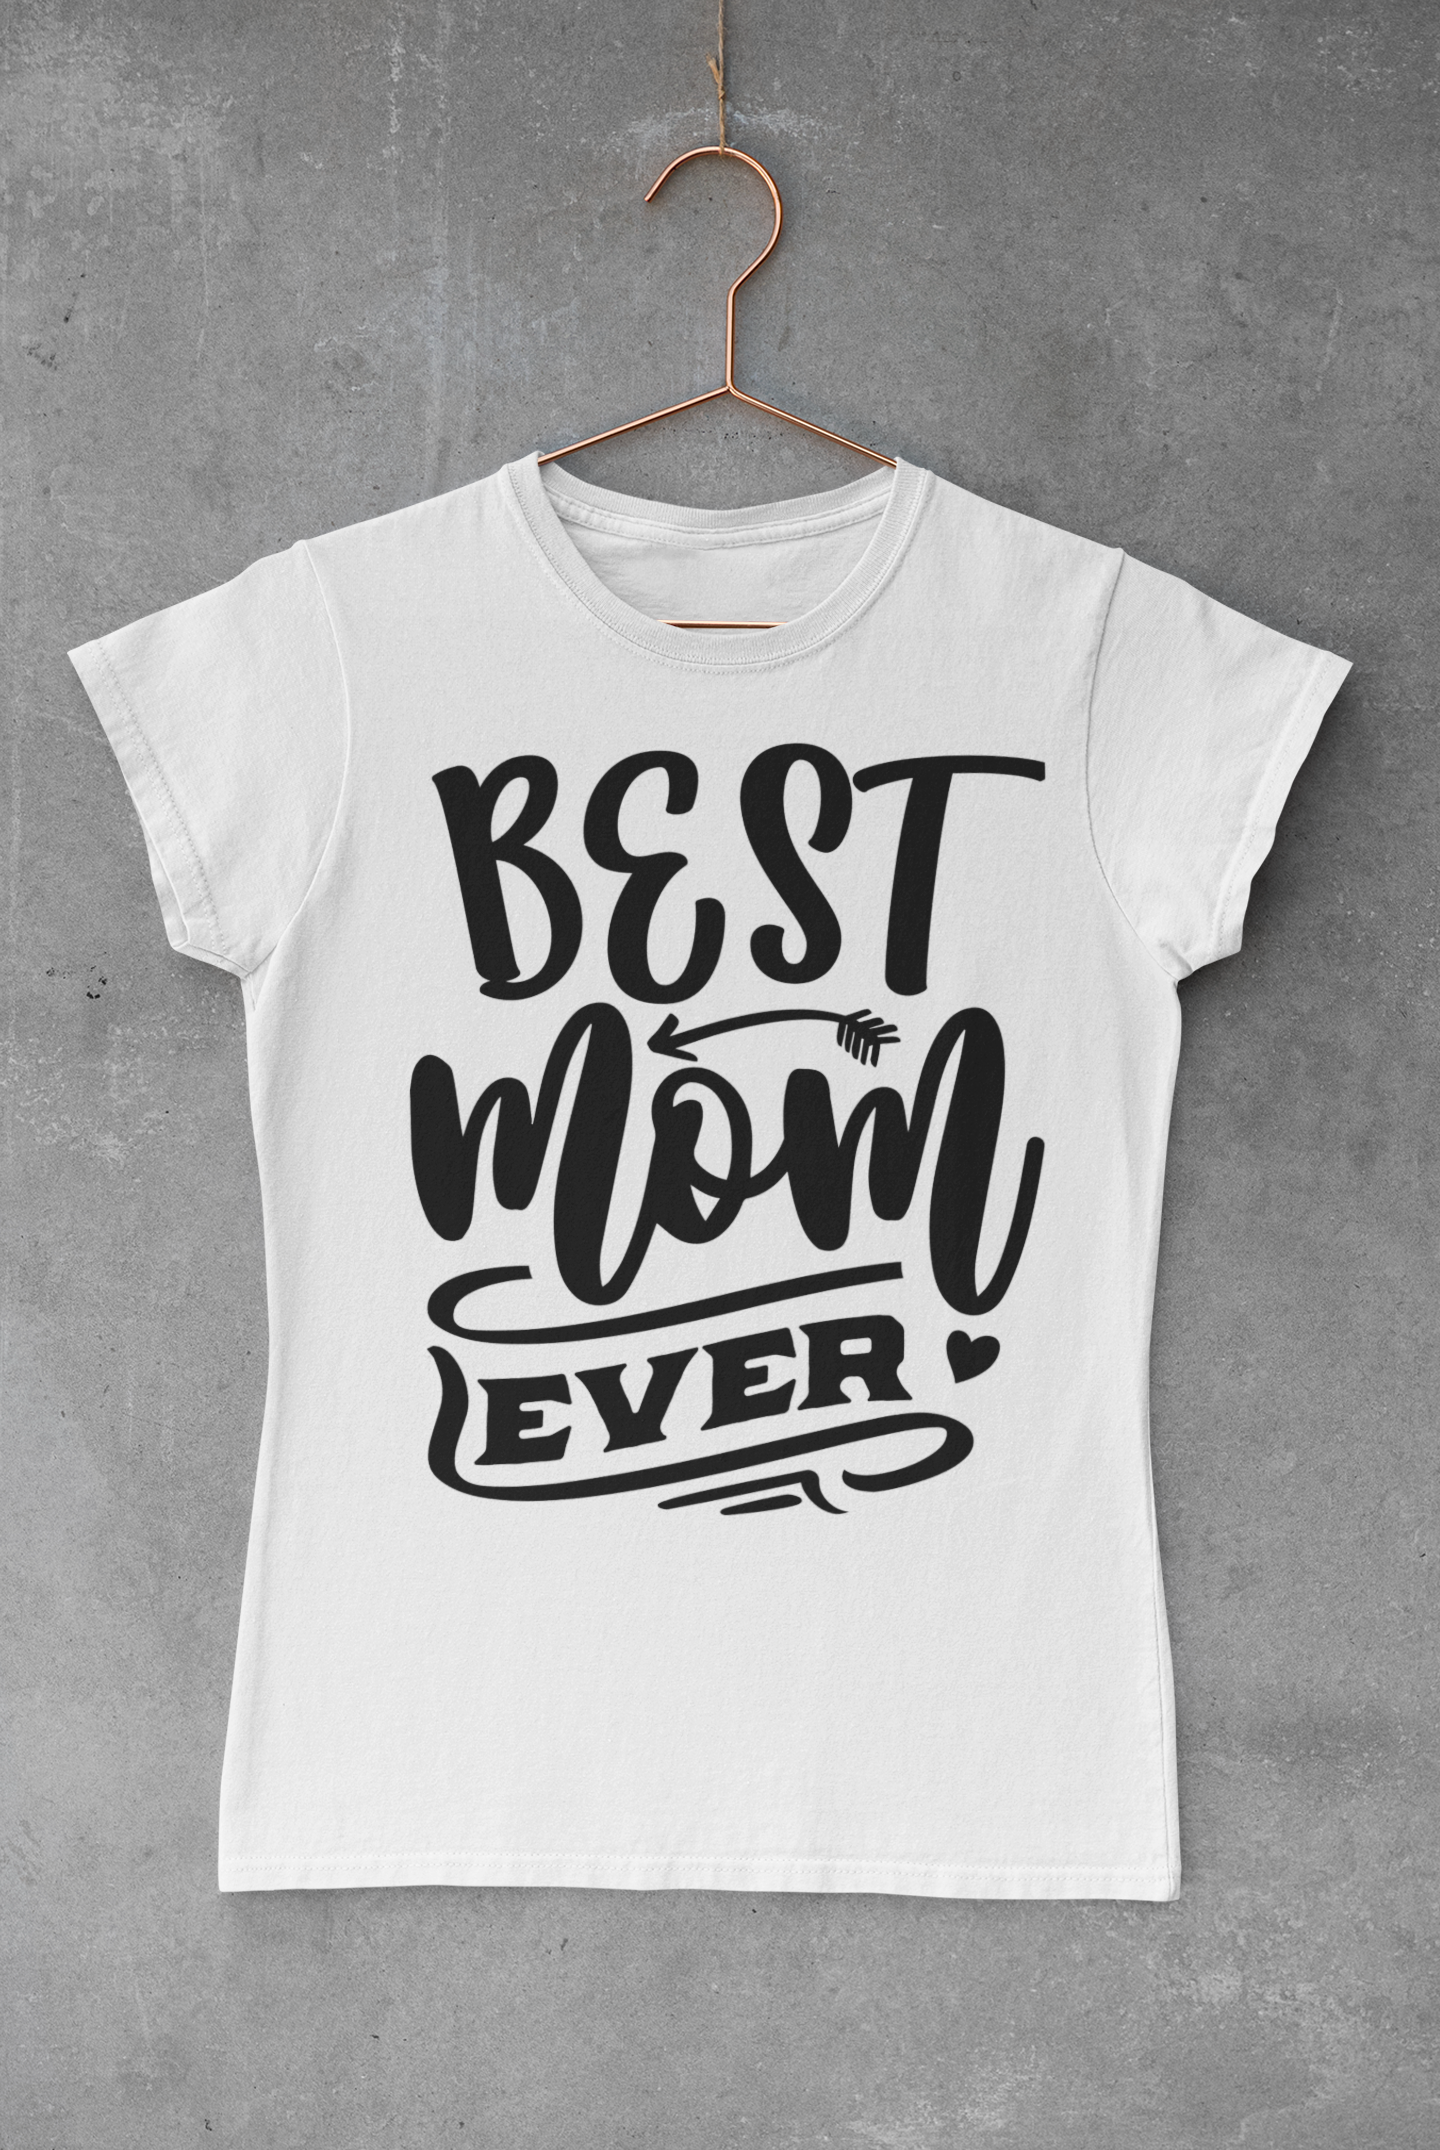 Best Mom Ever T-shirt